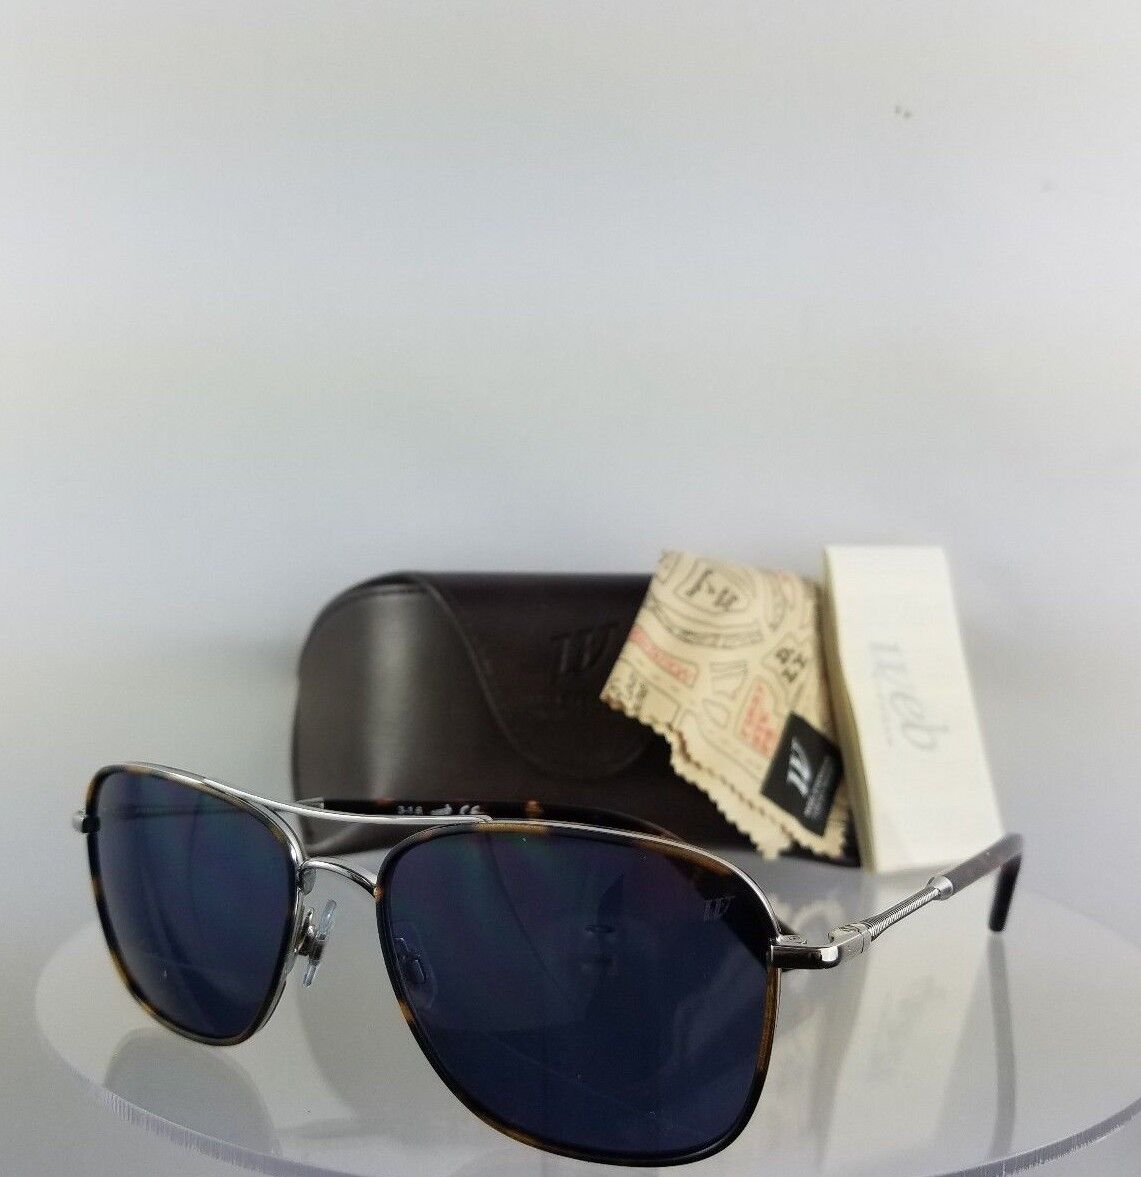 Brand New Authentic Web Sunglasses WE 0163 Col. 16V Tortoise/Silver 56mm Frame